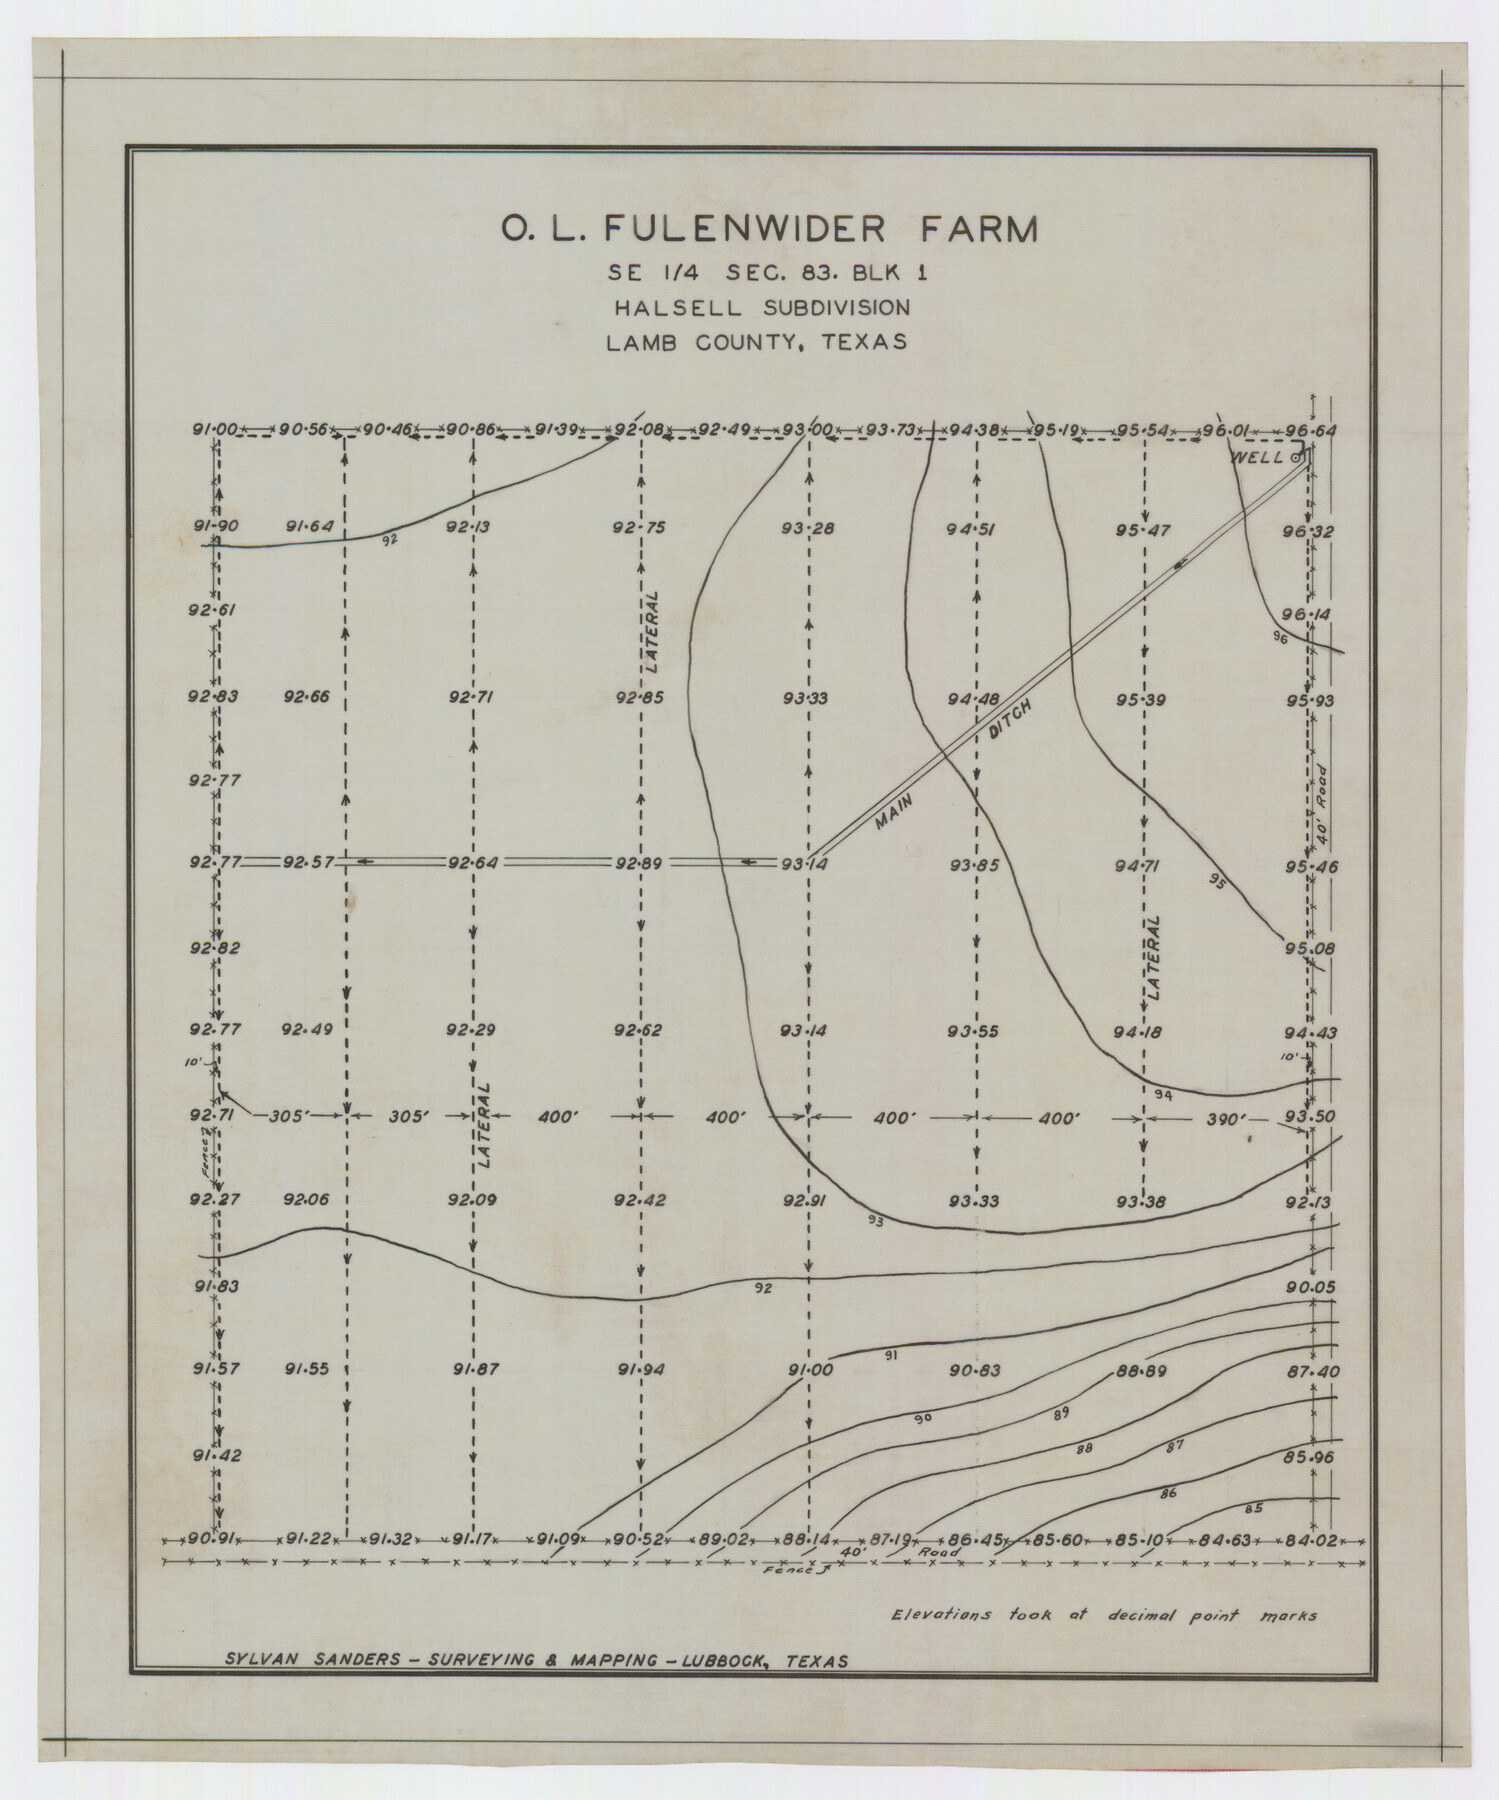 92407, O. L. Fulenwider Farm SE 1/4 Section 83, Block 1 Halsell Subdivision, Twichell Survey Records